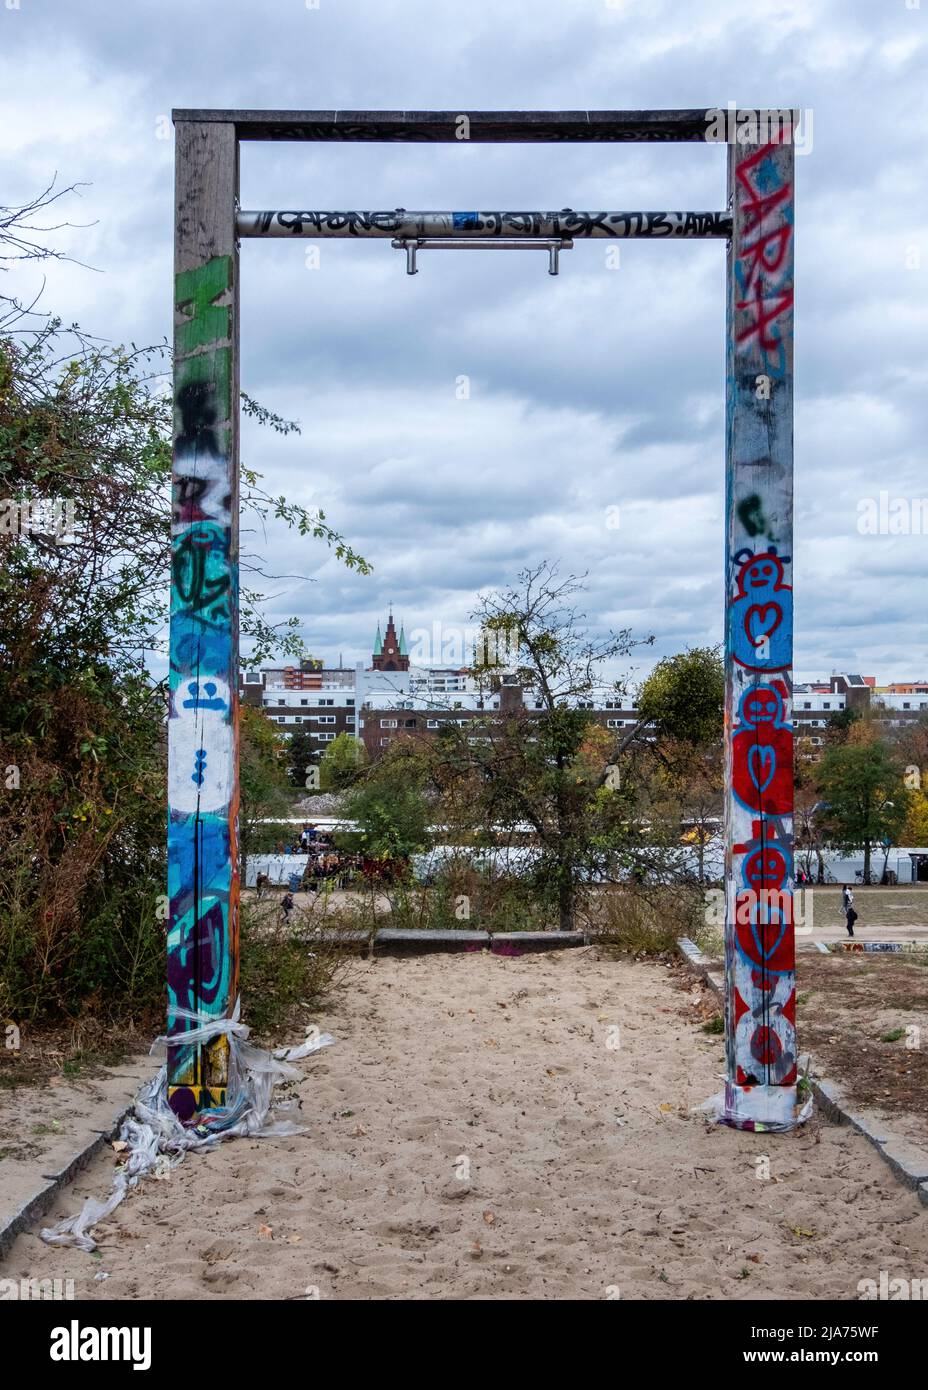 Graffiti-covered frame of old swing in Mauerpark, Prenzlauer Berg, Berlin,  Germany Stock Photo - Alamy